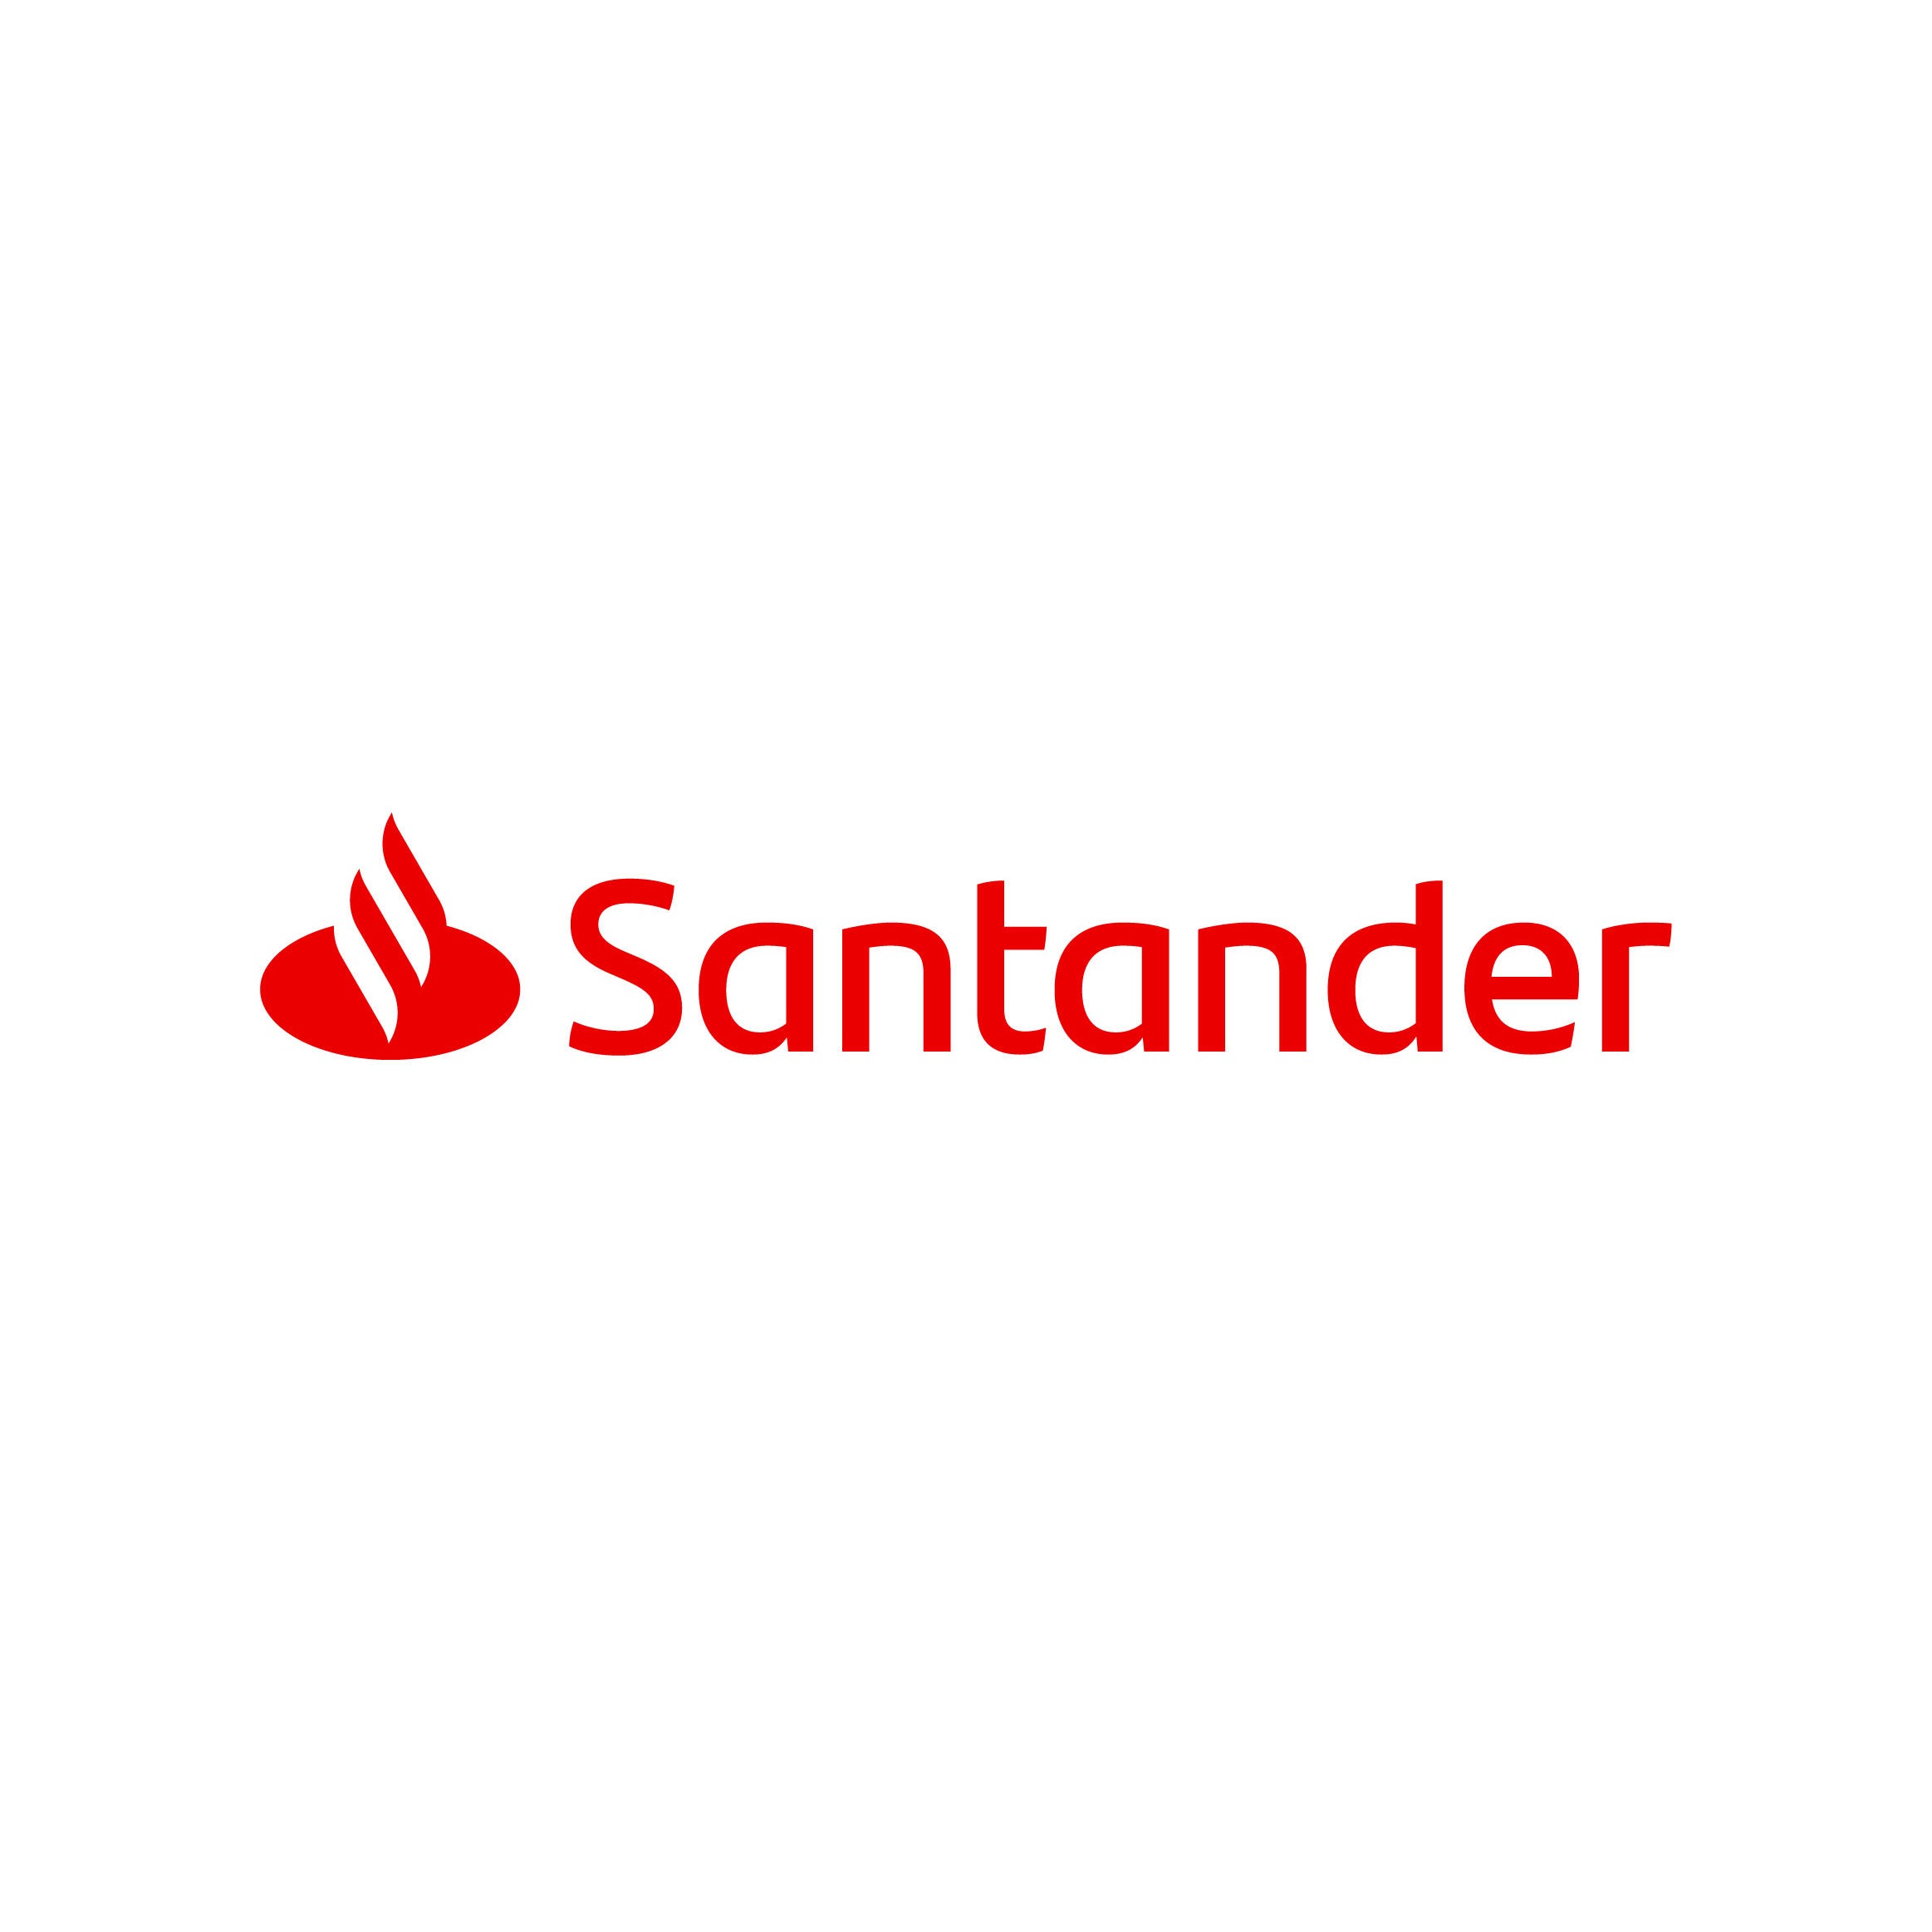 Santander in München - Logo